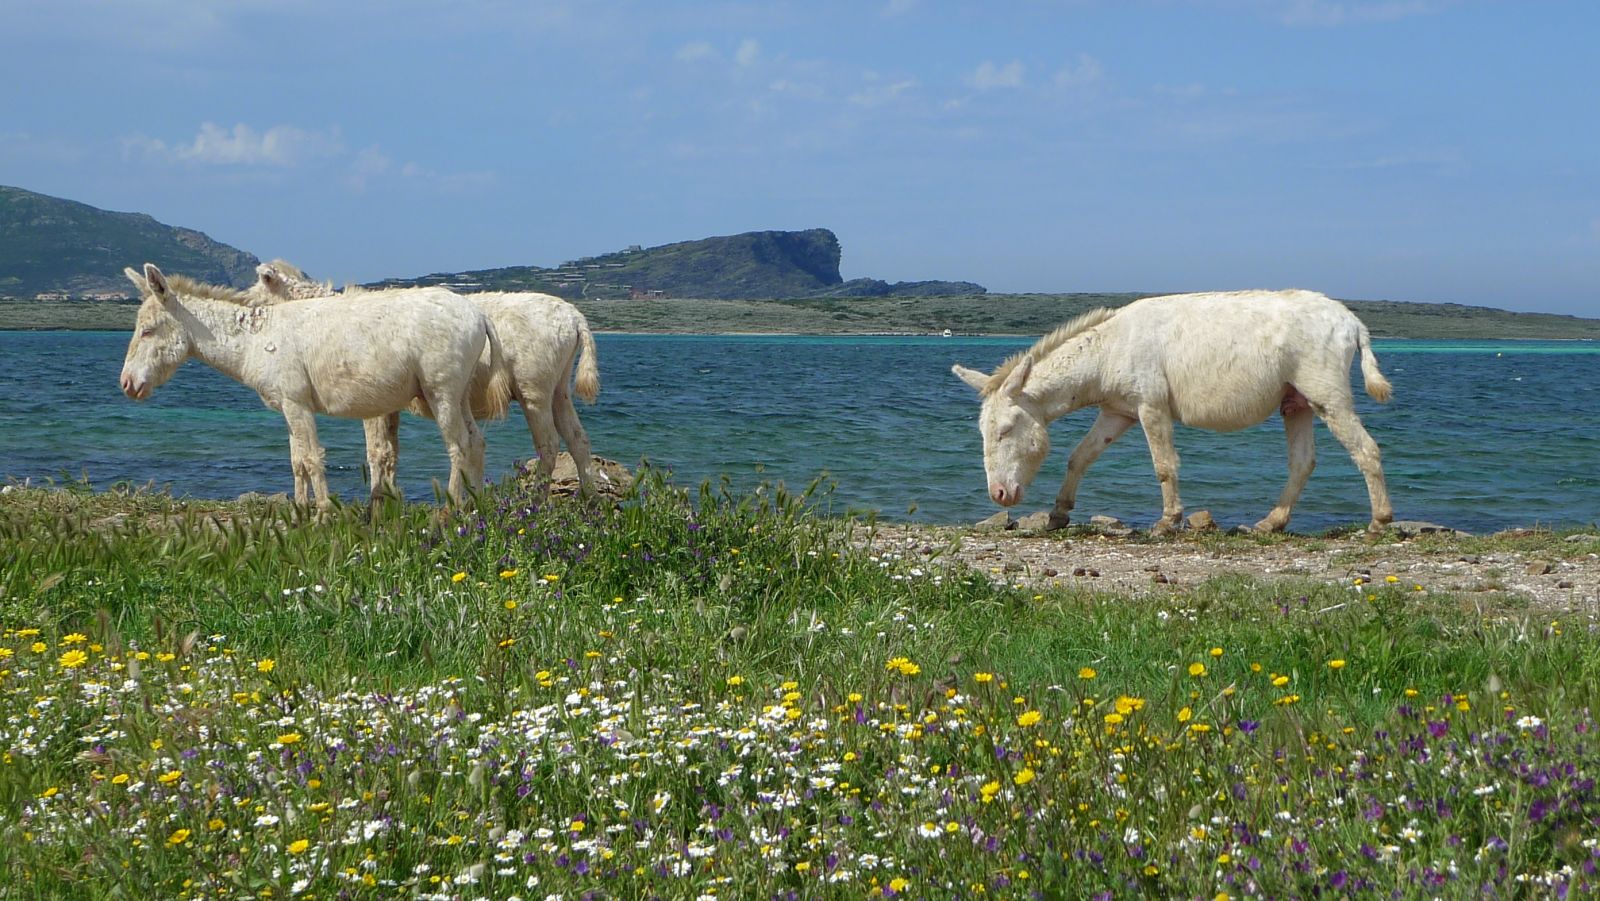 White donkeys in Sardinian coastal landscape